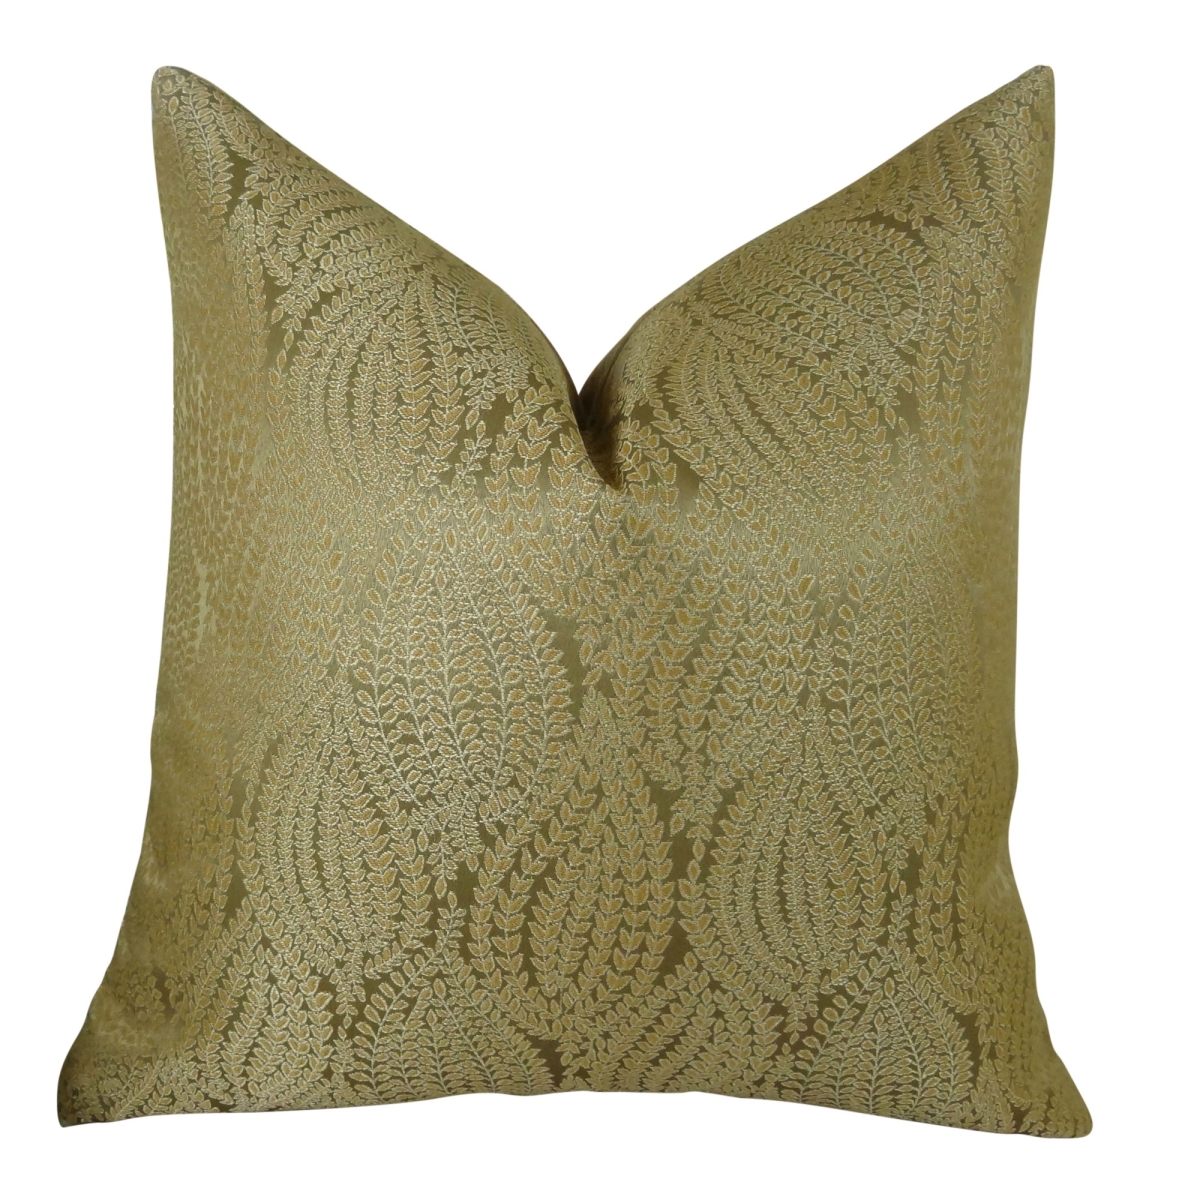 Pb11015-2020-sp Leaf Pod Handmade Throw Pillow, Gold - 20 X 20 In.